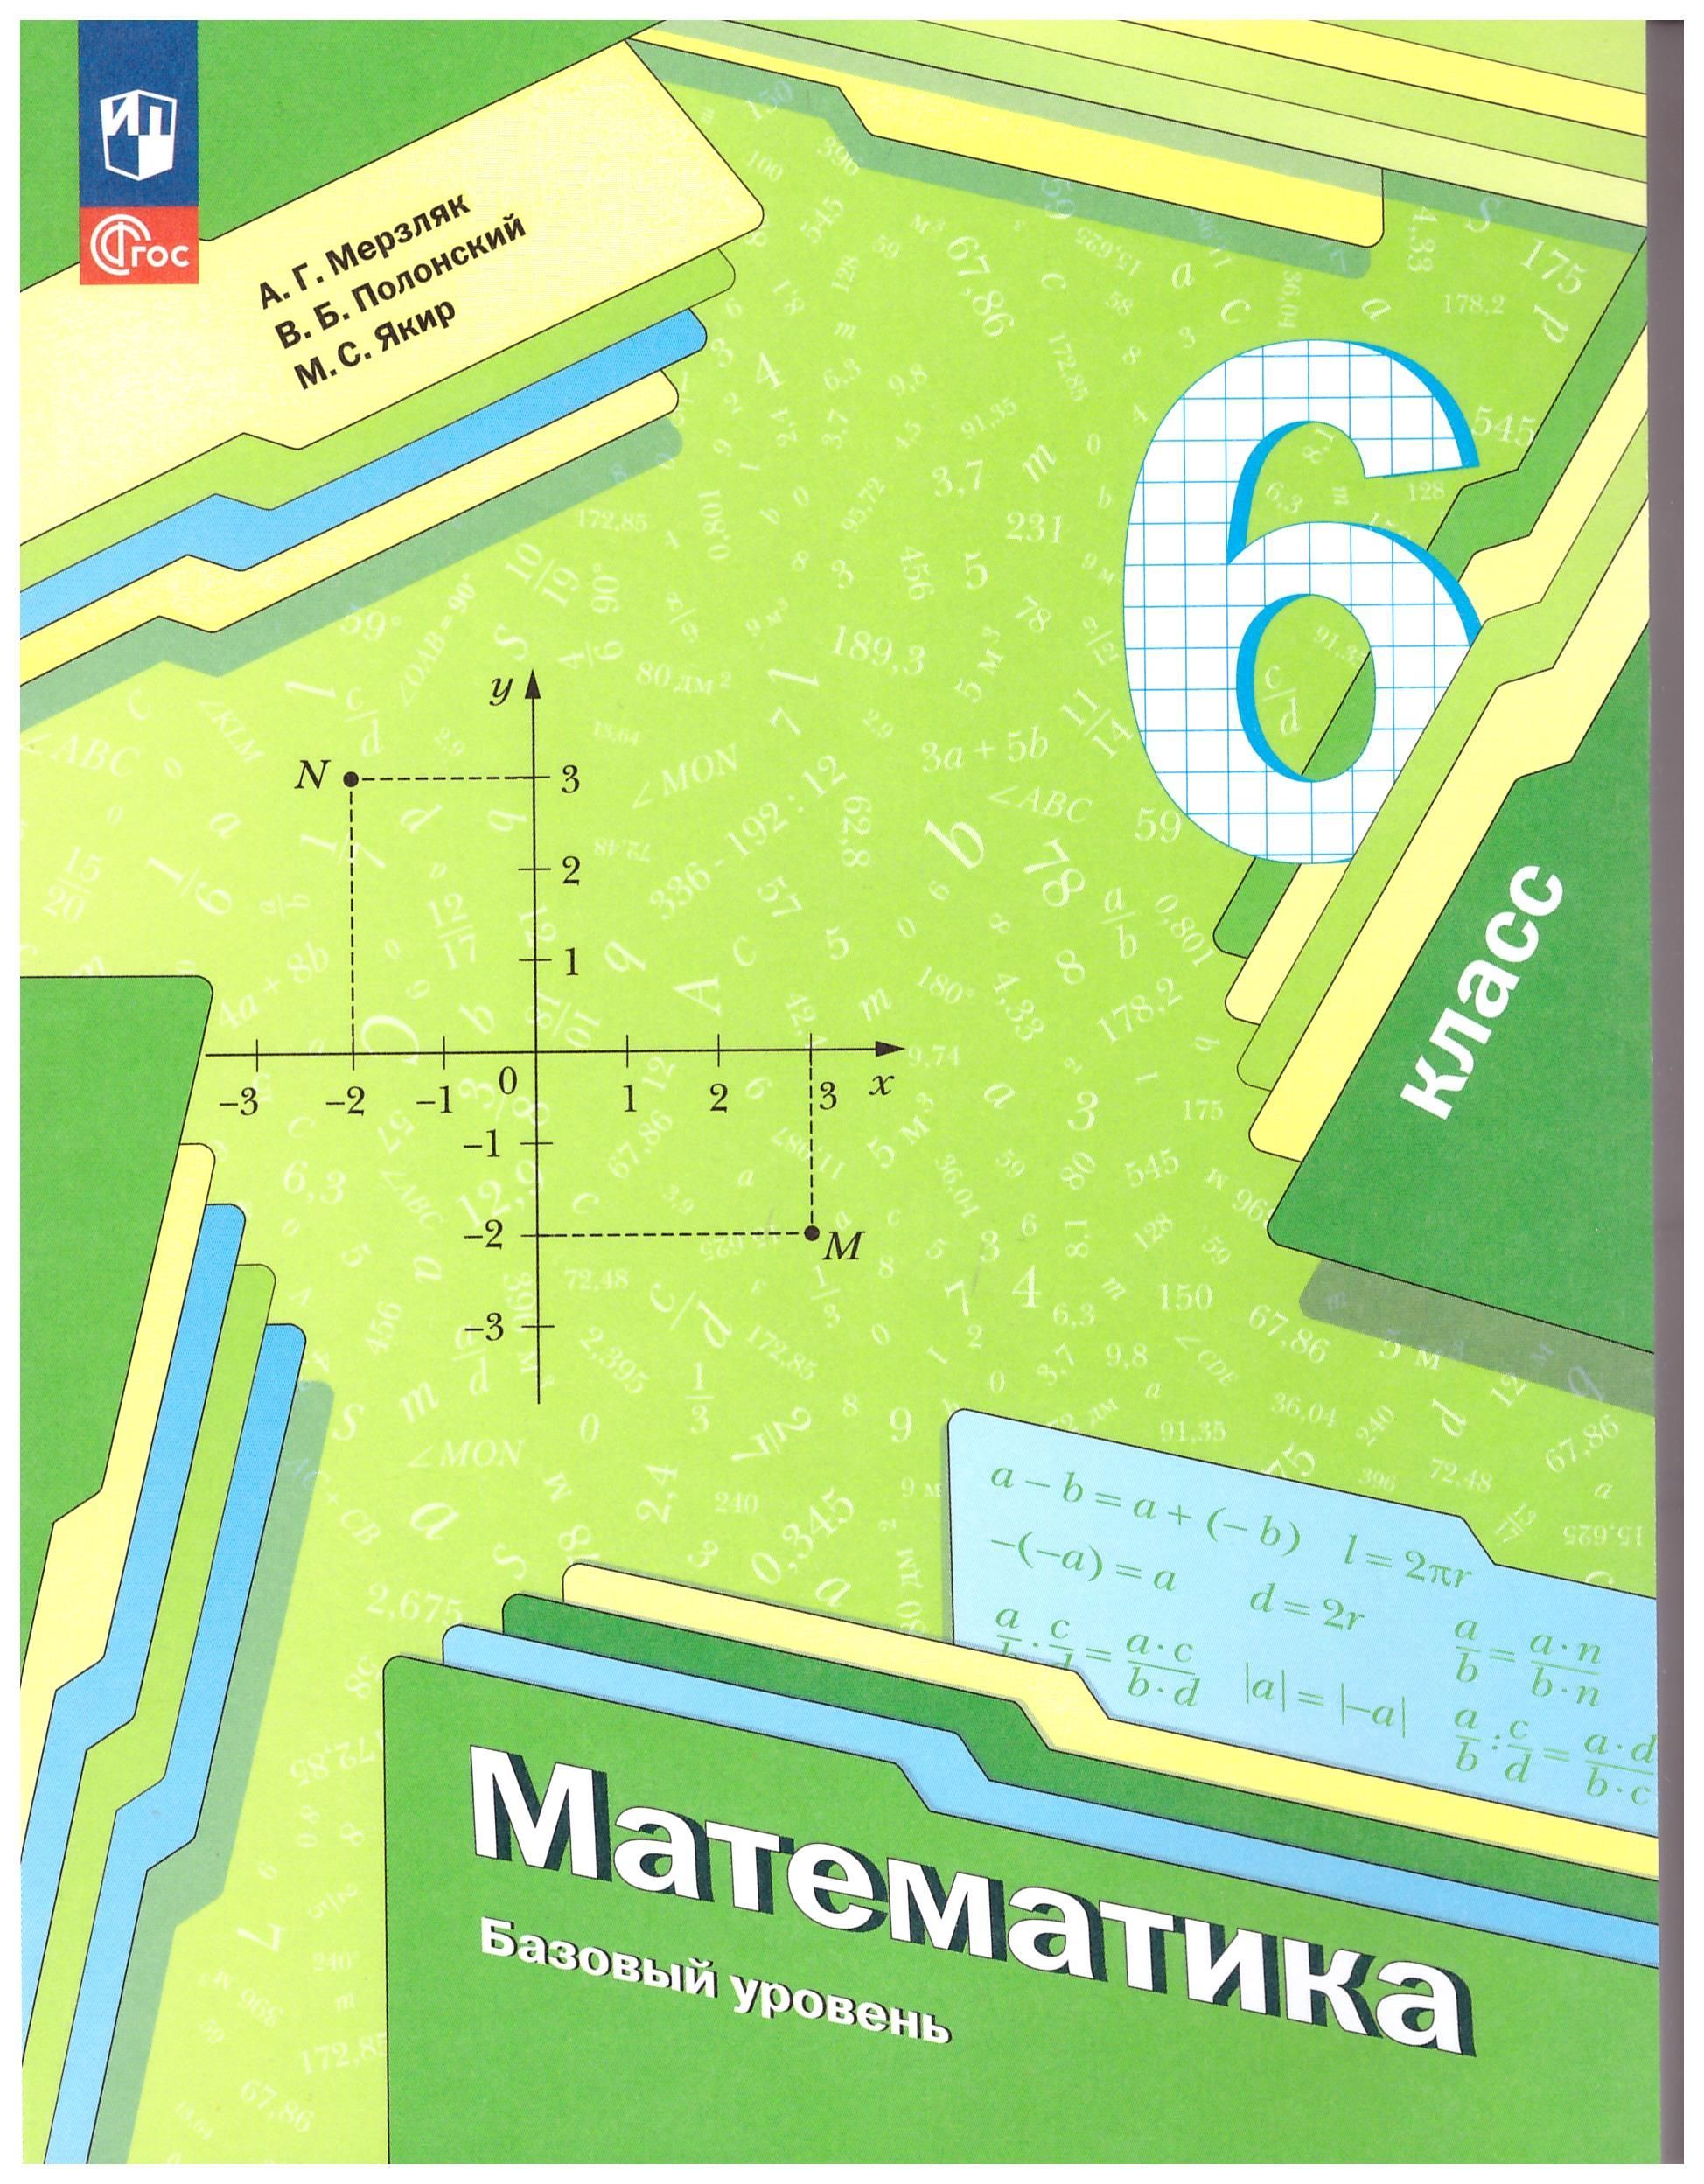 Математика учебник 6 класс мерзляк номер 1088. Математика 6 класс Мерзляк. Учебник по математике 6 класс Мерзляк обложка. Учебник учебник математики 6 класс Мерзляк.